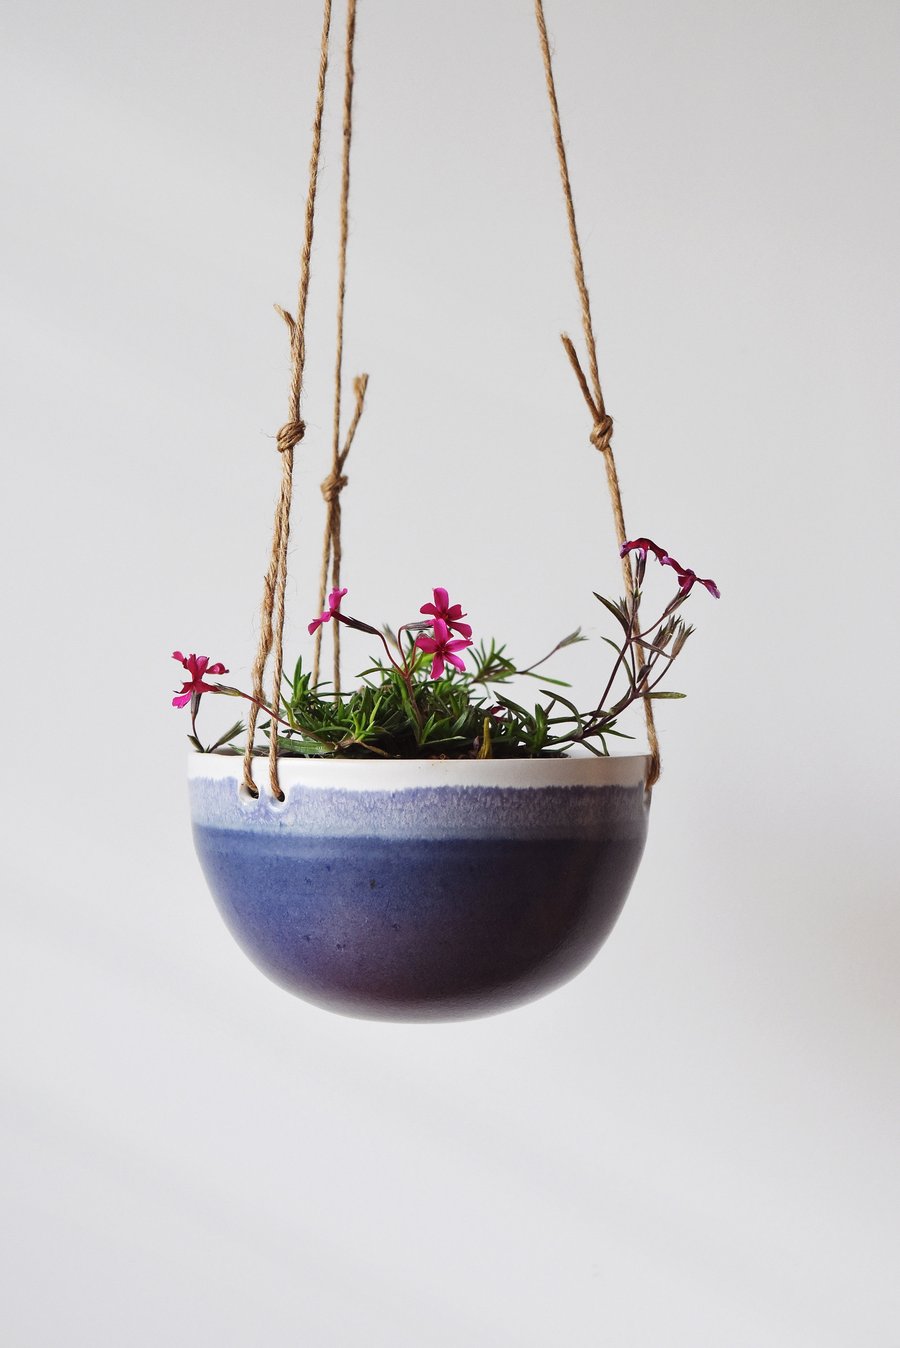 Hanging indoor planter in blue and white - handmade ceramics